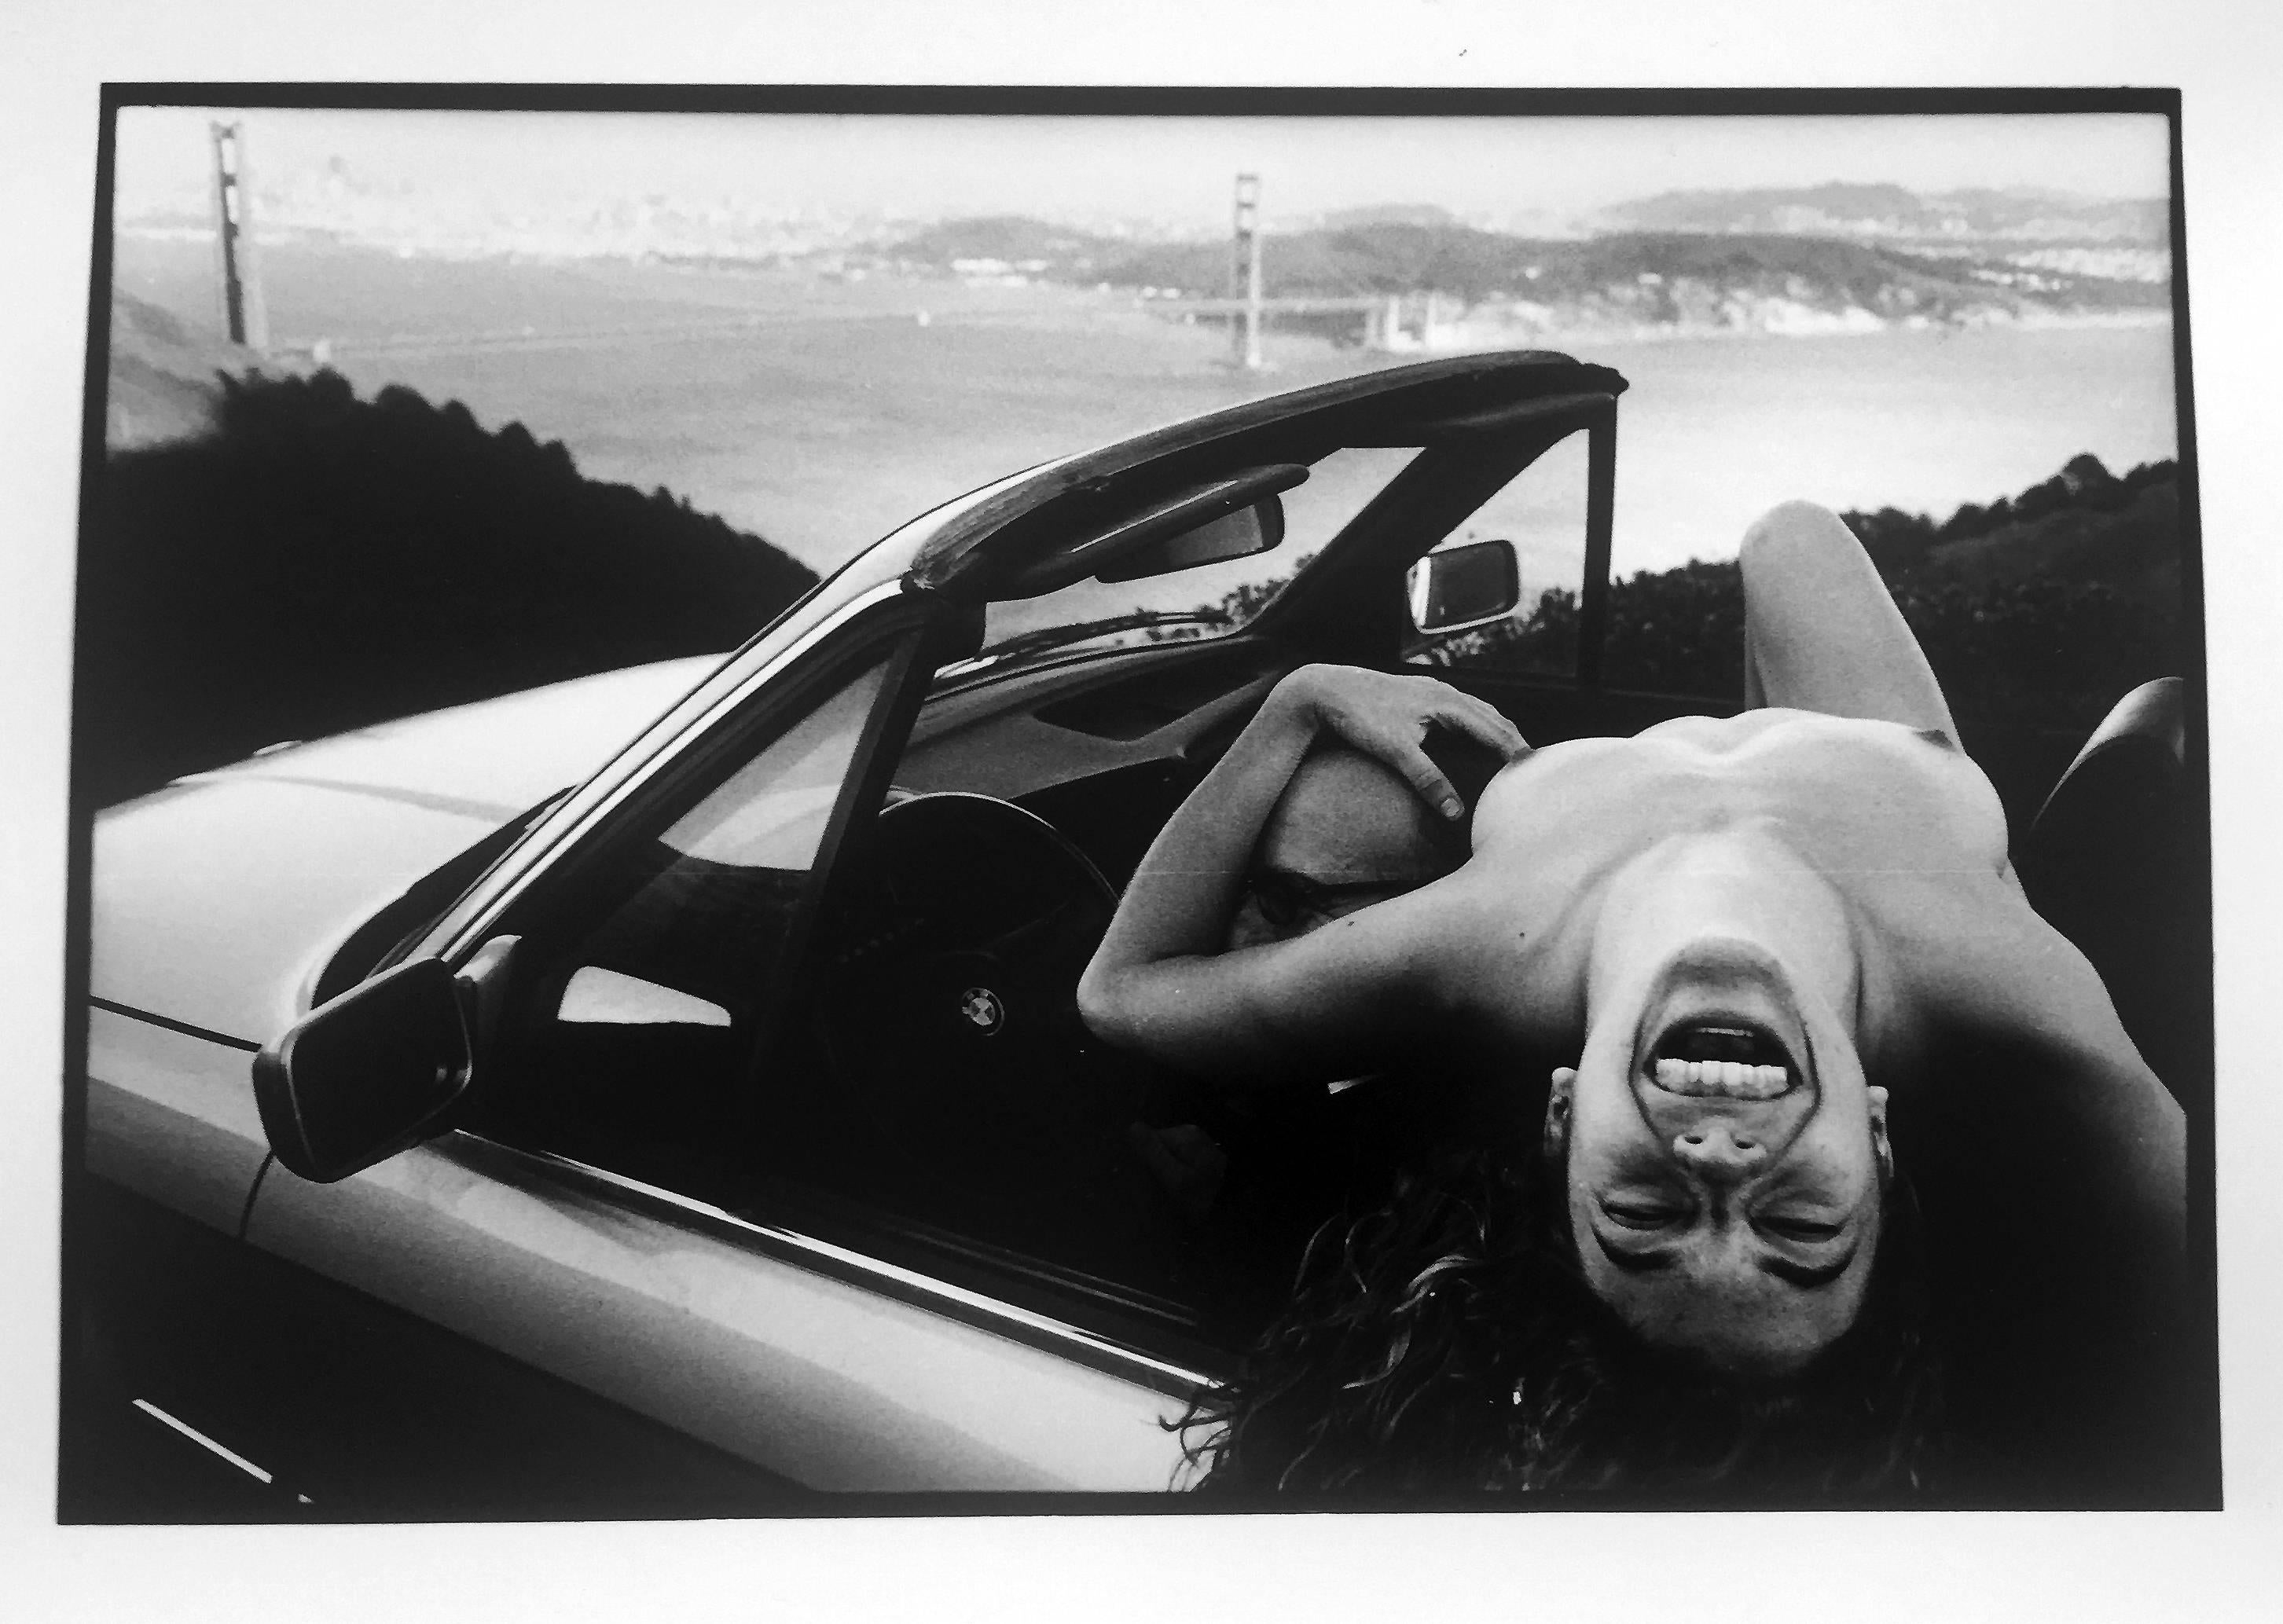 Leonard Freed Nude Photograph - Kate #15, Vintage Gelatin Silver Photograph of Female Nude at Golden Gate Bridge